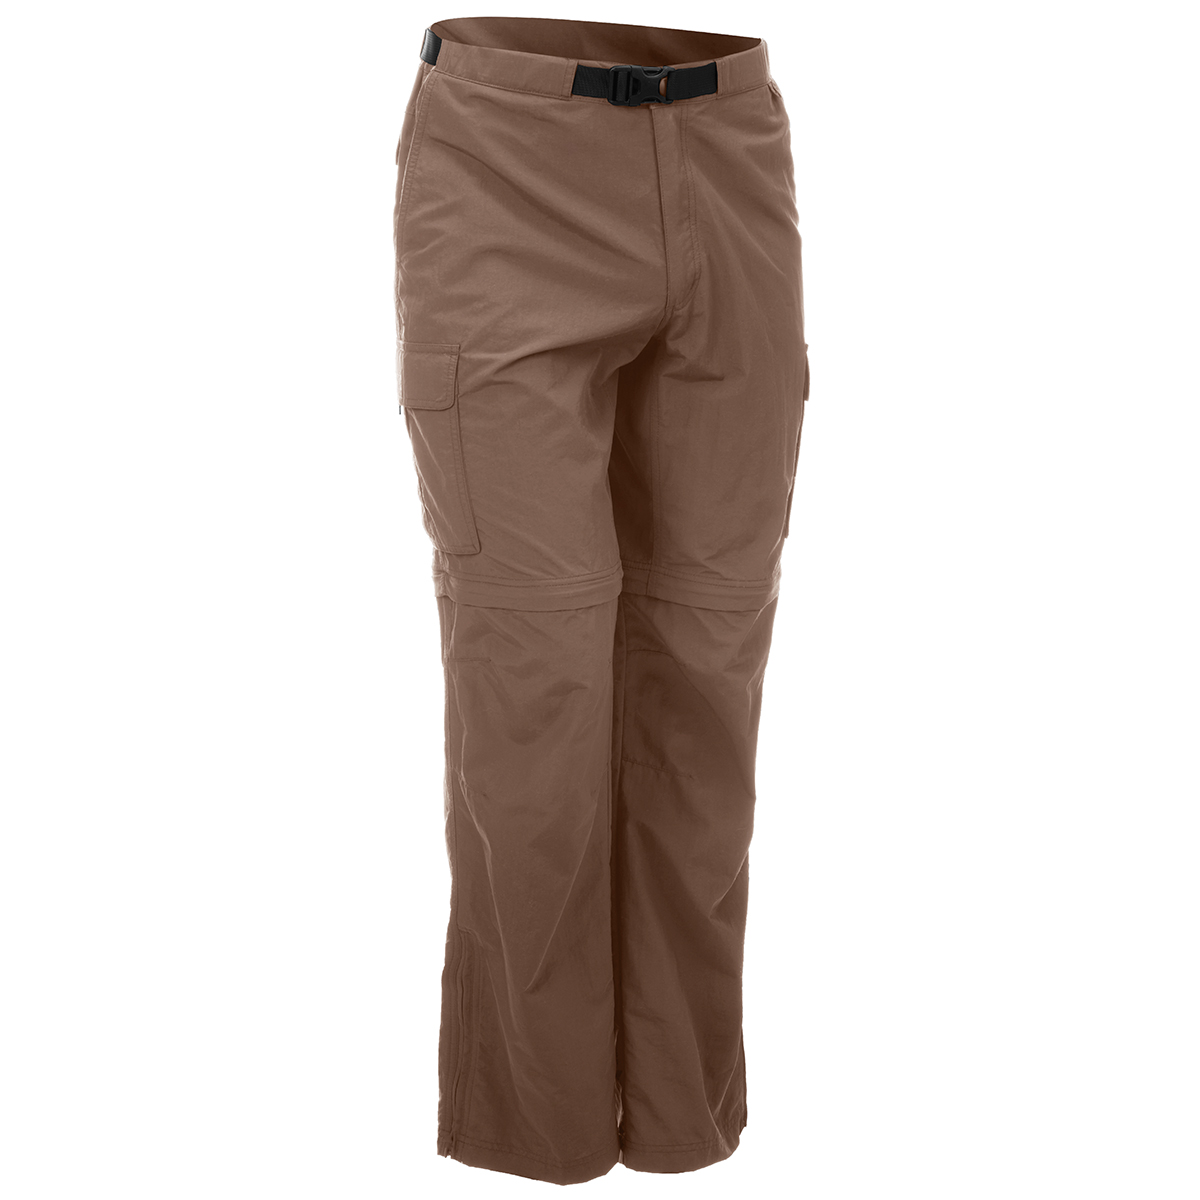 Ems Men's Camp Cargo Zip-Off Pants - White, 32/32